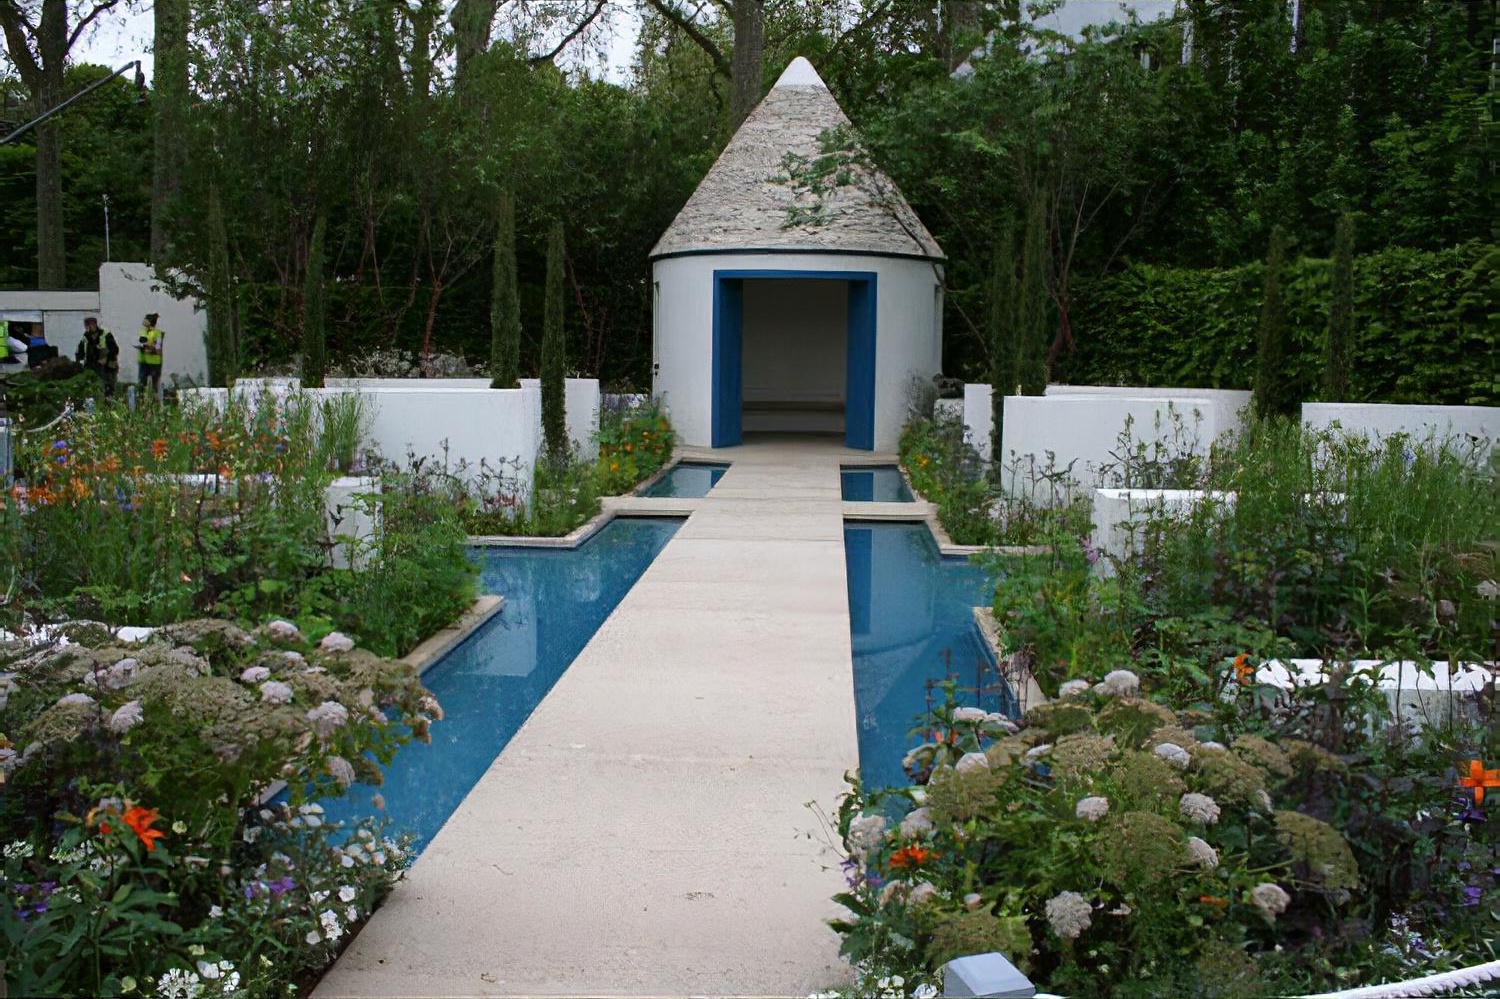 RHS Chelsea Flower Show 2012 he RBC Blue Water Garden, designed by Nigel Dunnett and The Landscape Agency